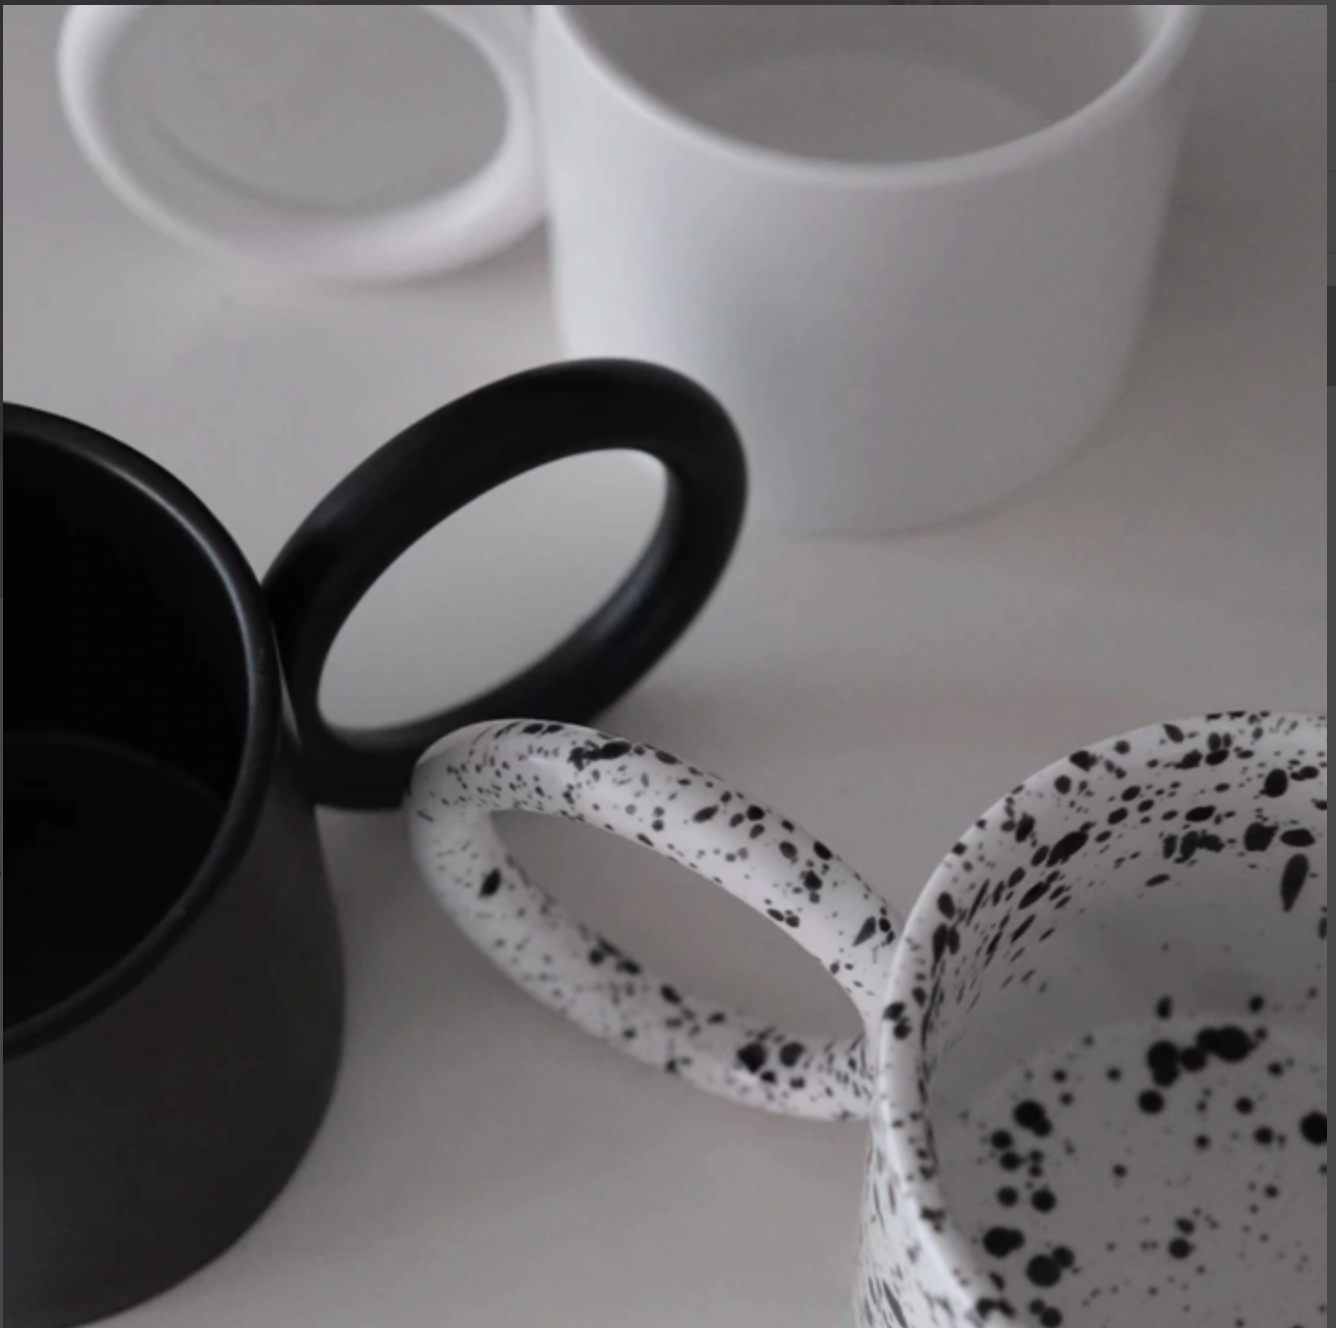 Nordic Mugs With Big Round Handle